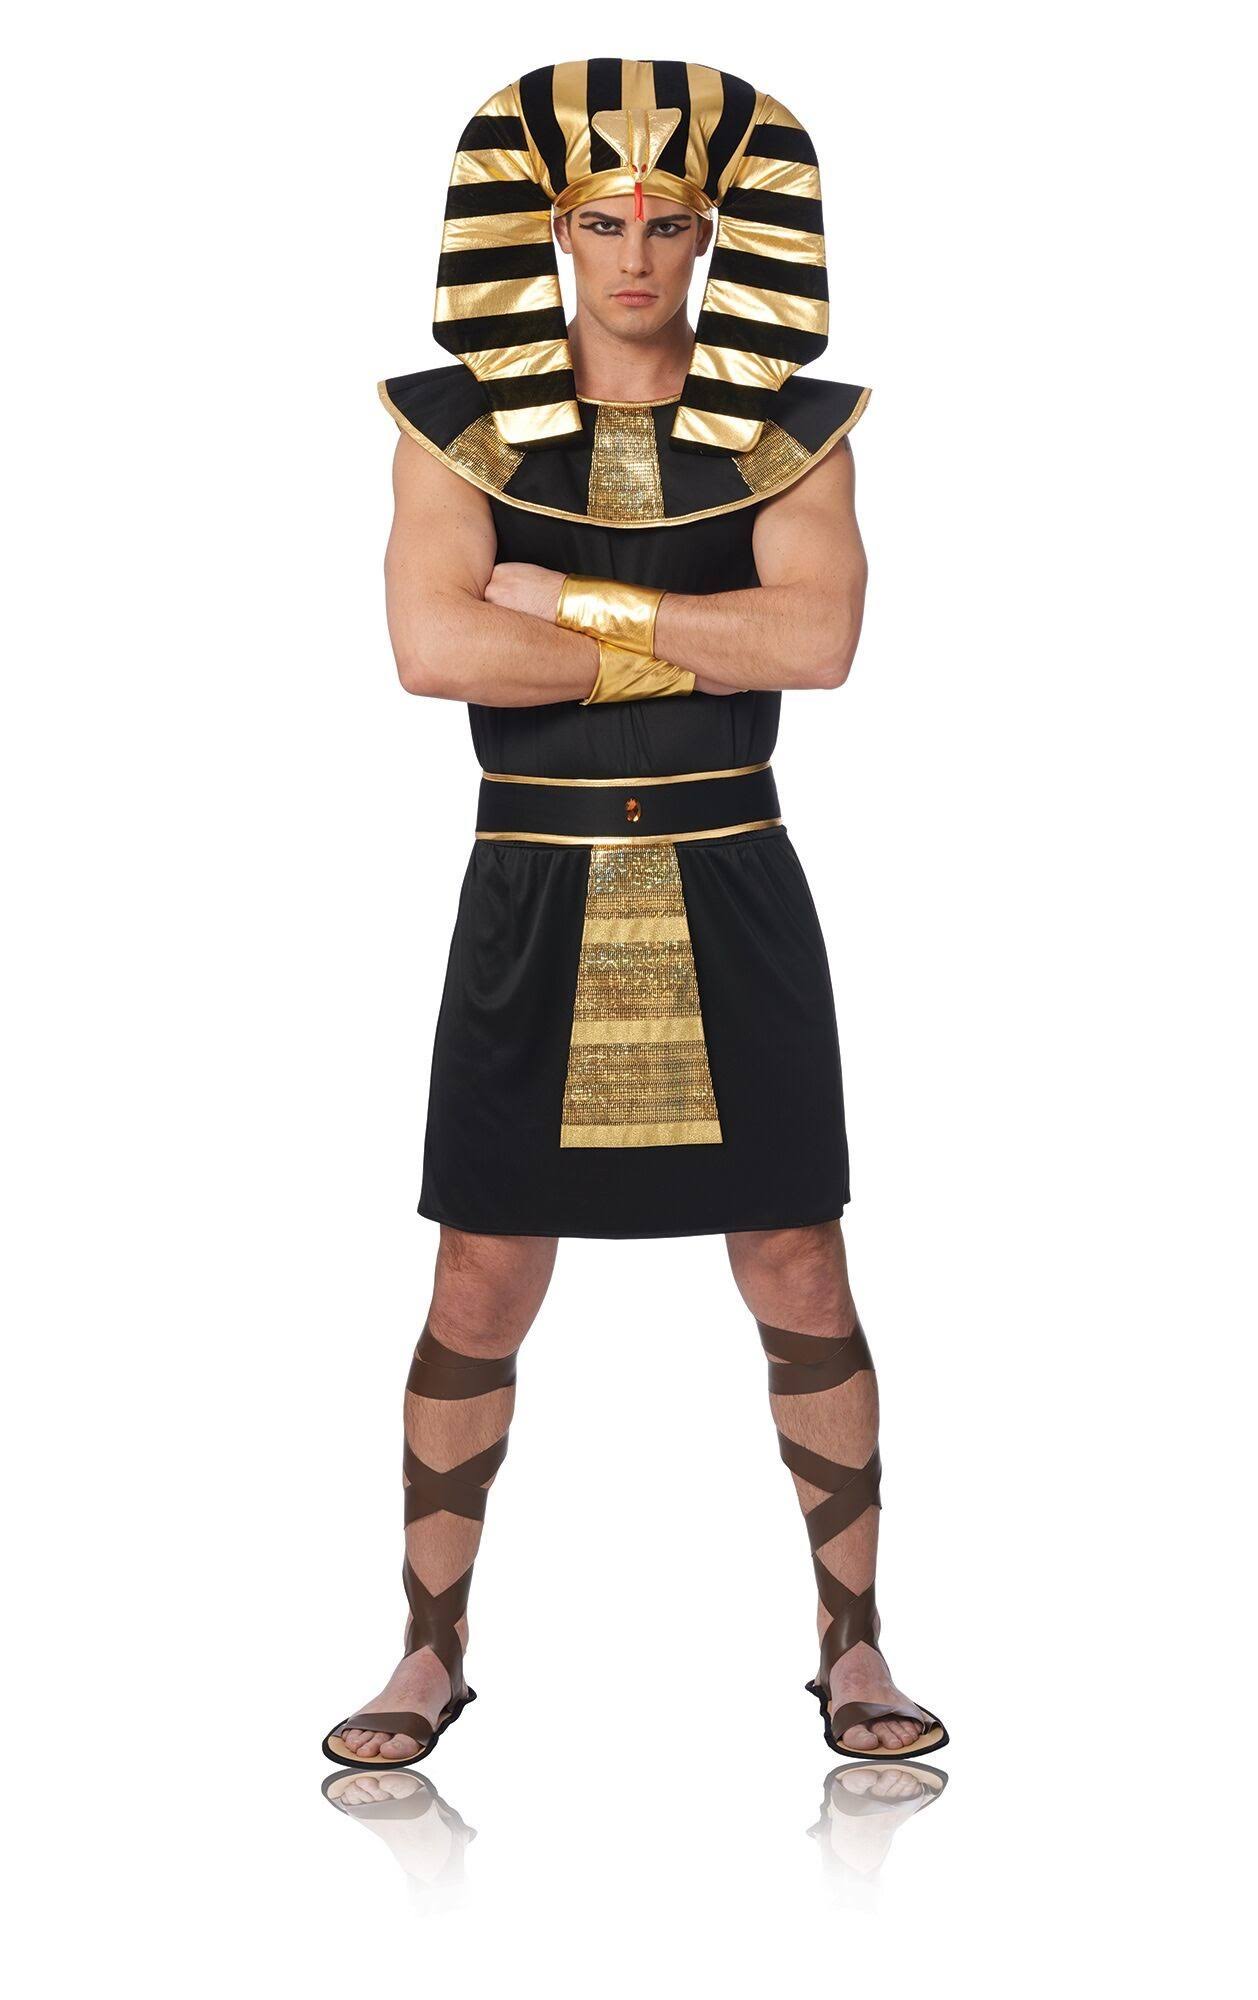 Costume Culture Men's Pharaoh Costume, Black, Standard